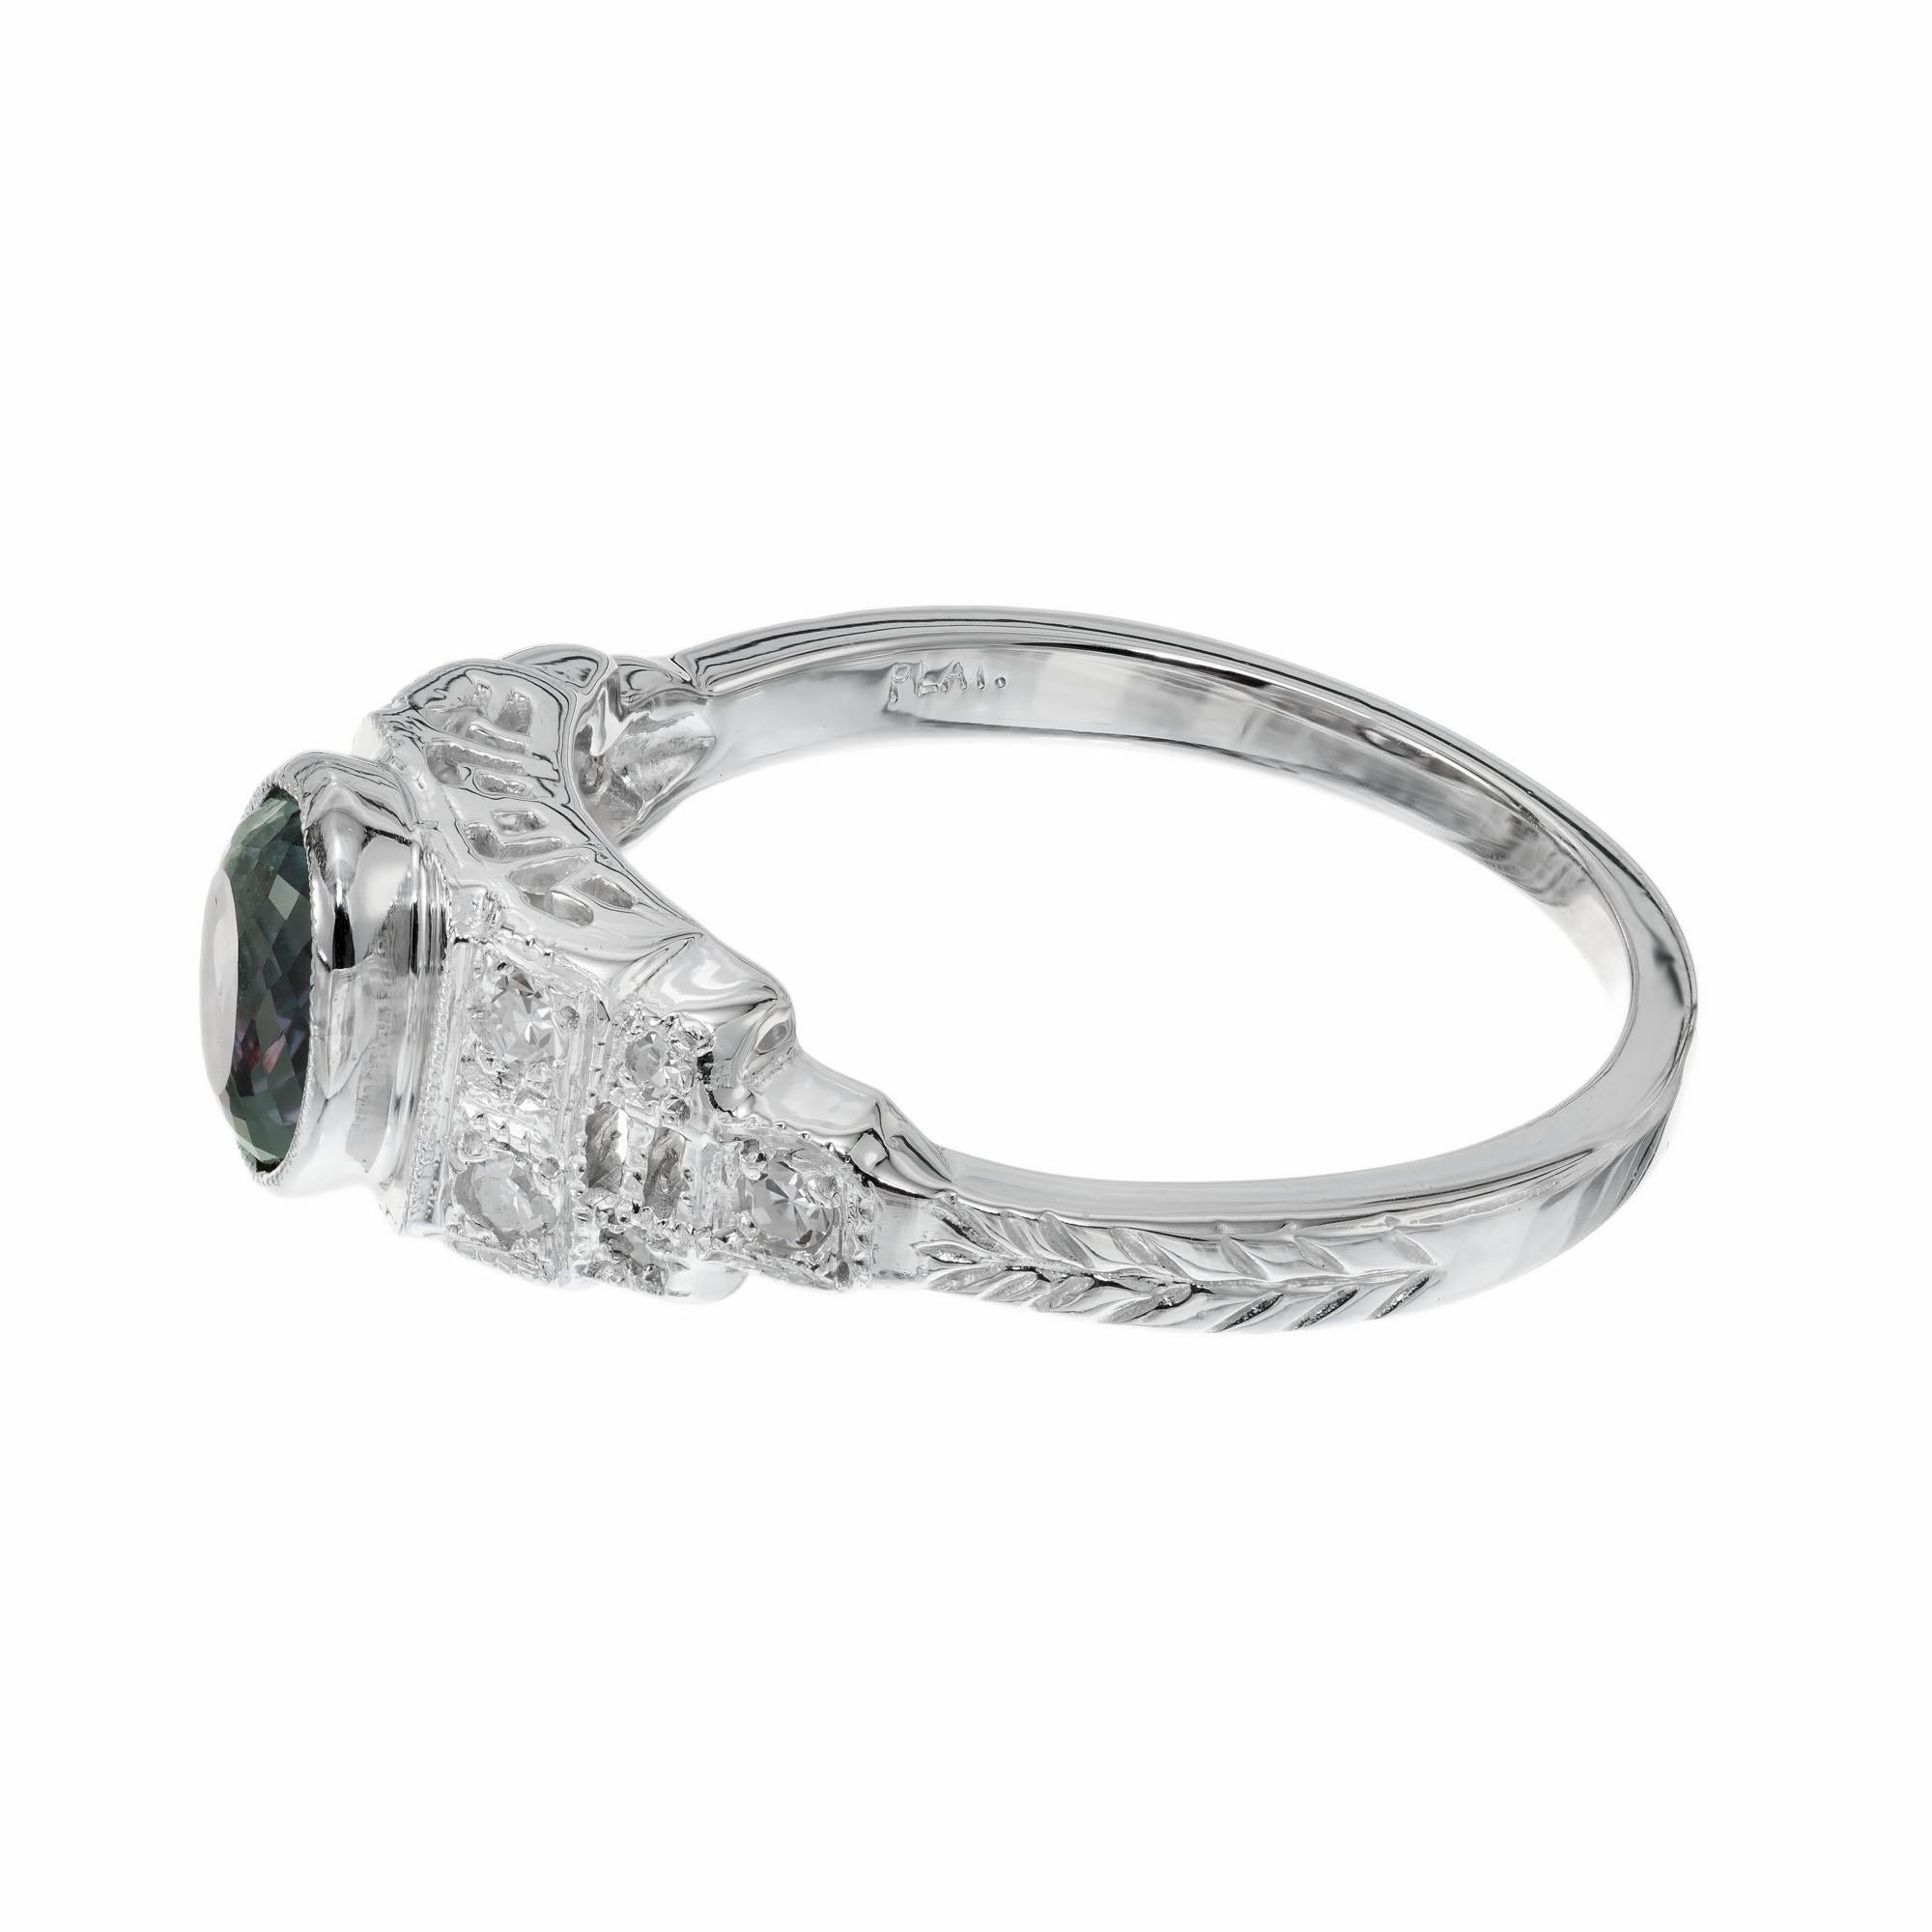 Oval Cut GIA Certified .95 Carat Alexandrite Diamond Platinum Art Deco Engagement Ring